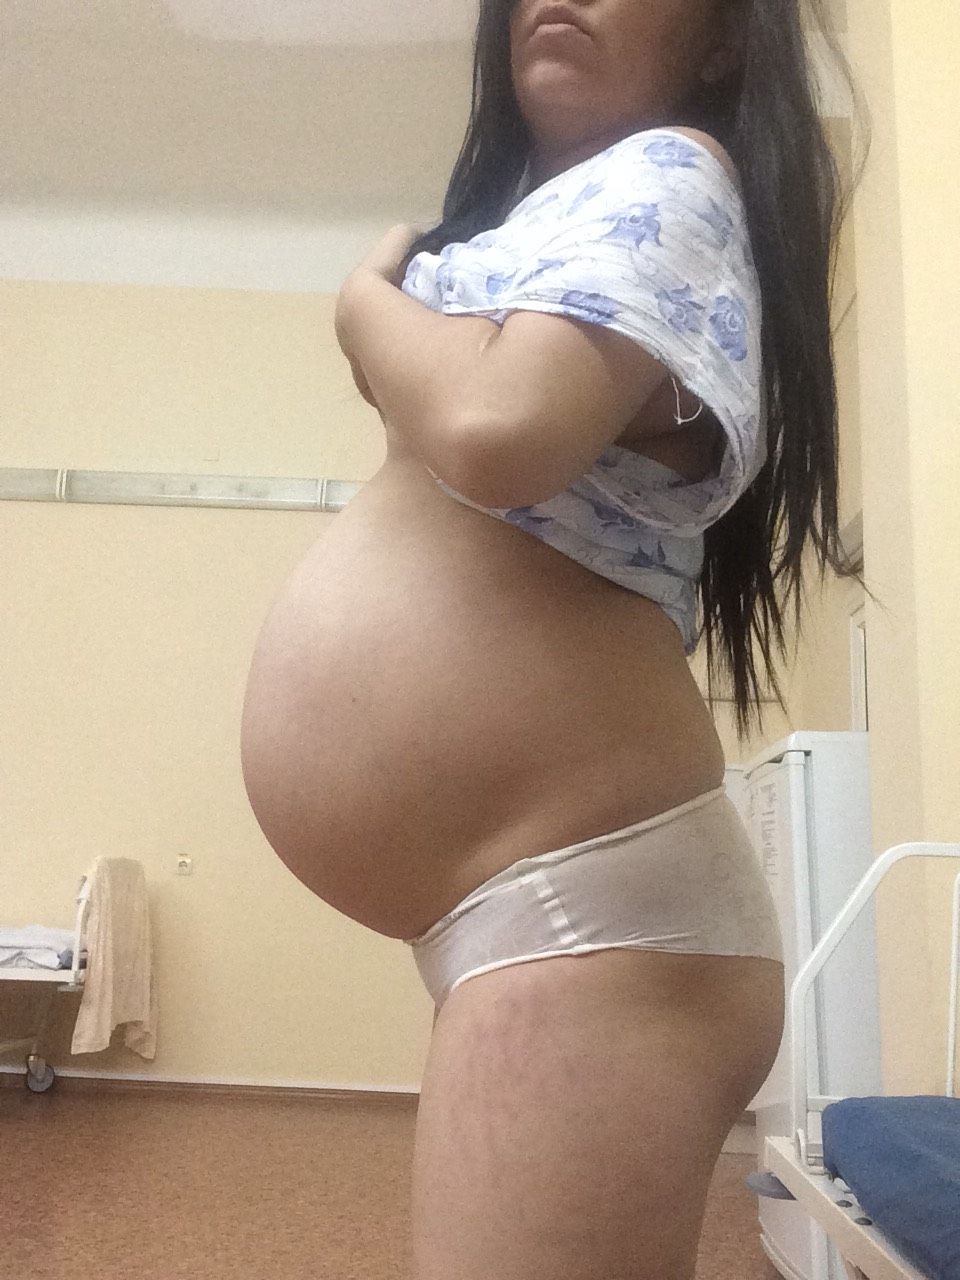 твердеет живот при беременности во время оргазма фото 43